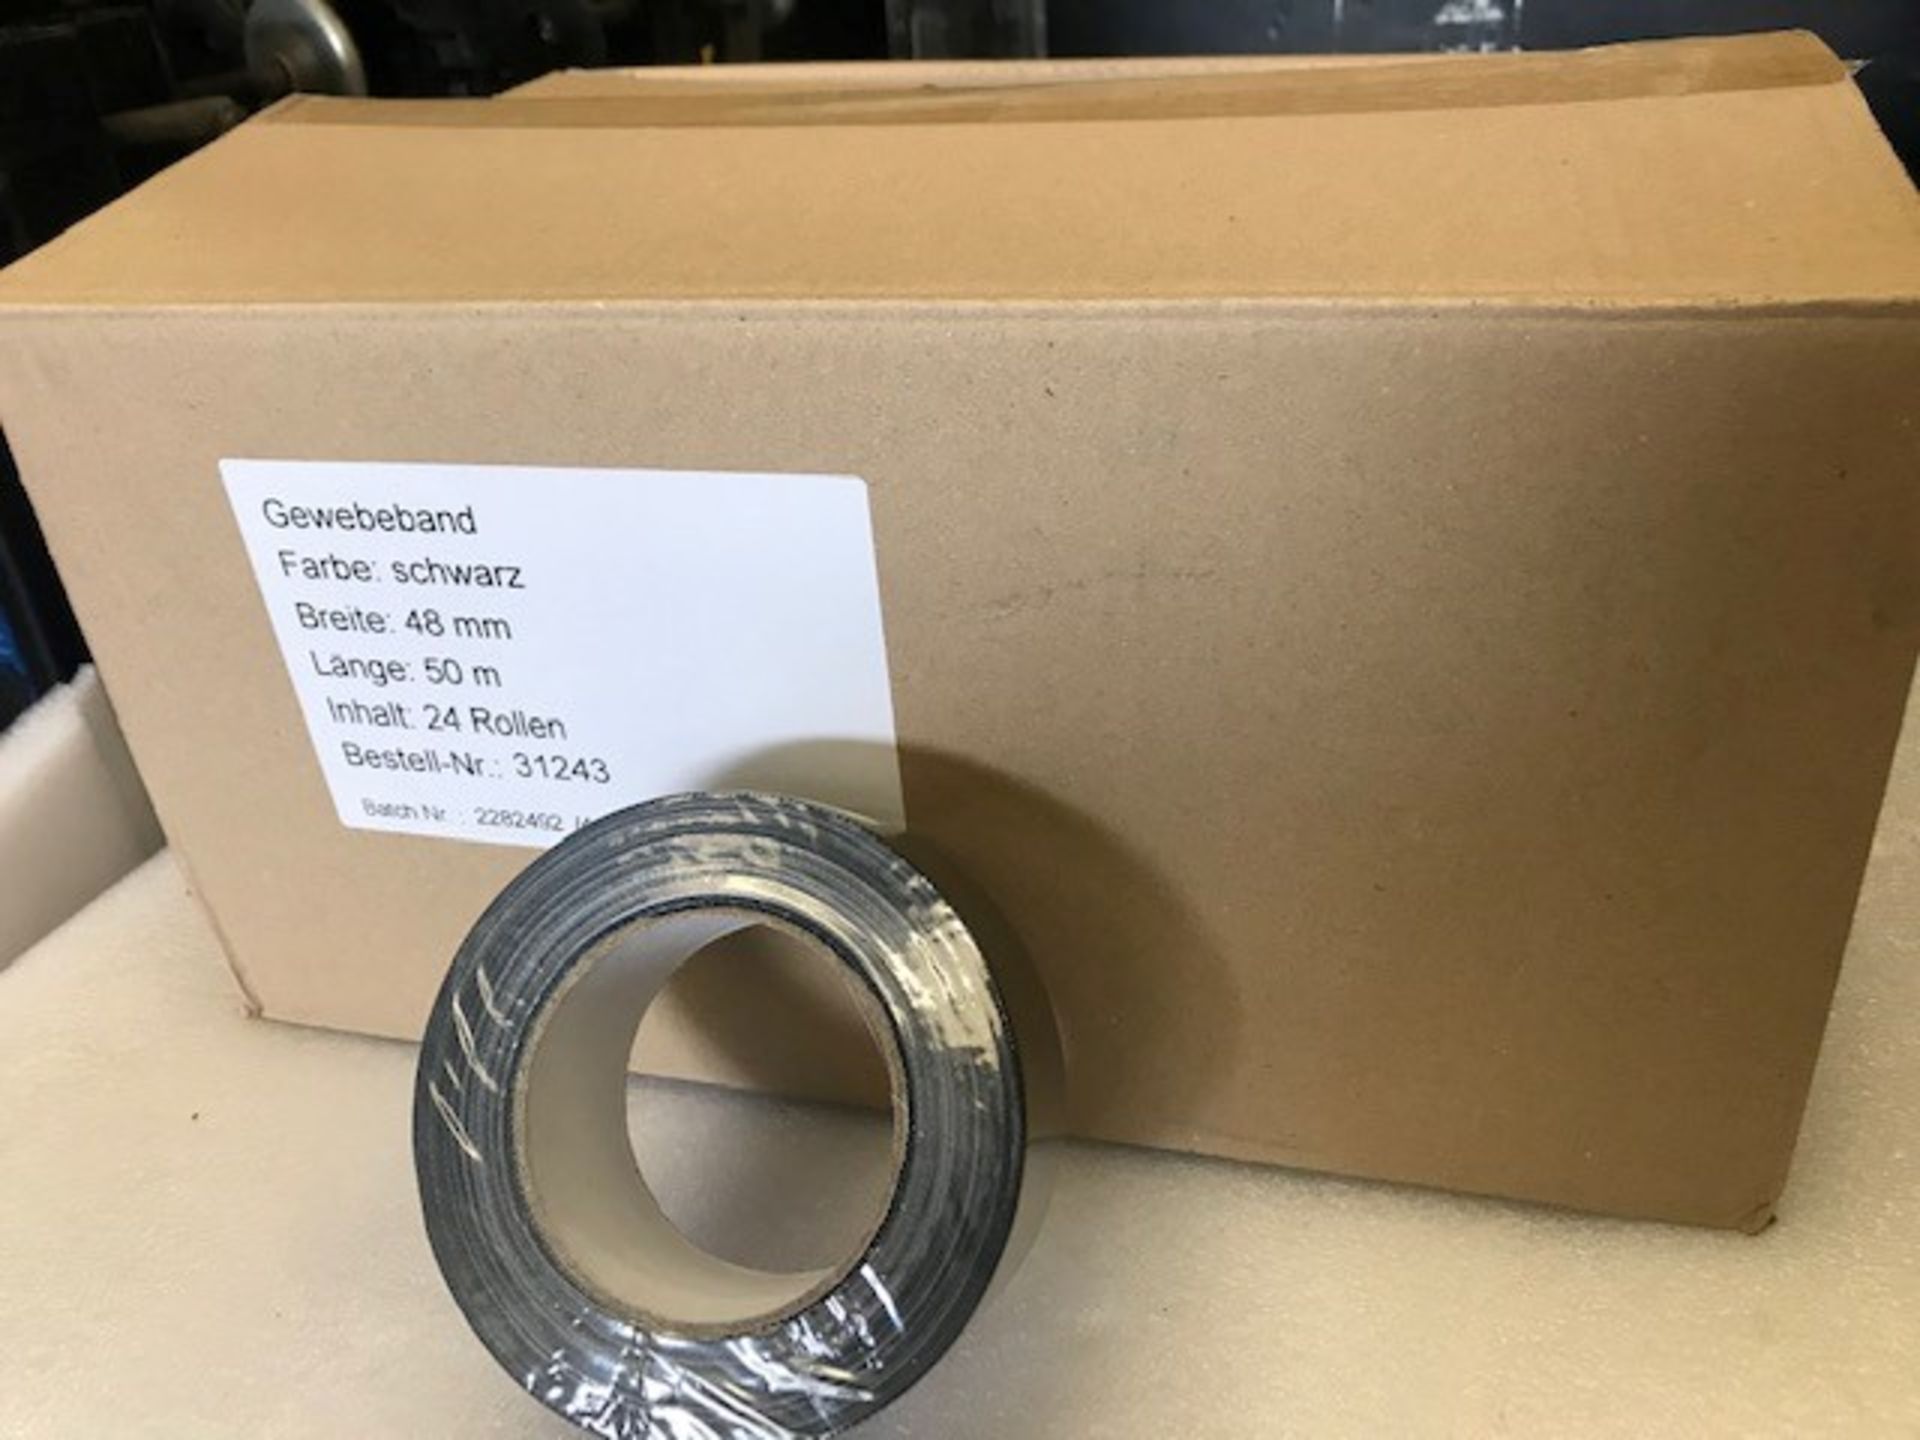 24 x Rolls Of Black Gaffer Tape - New & Boxed - Ref: 232 - CL581 - Location: Altrincham WA14